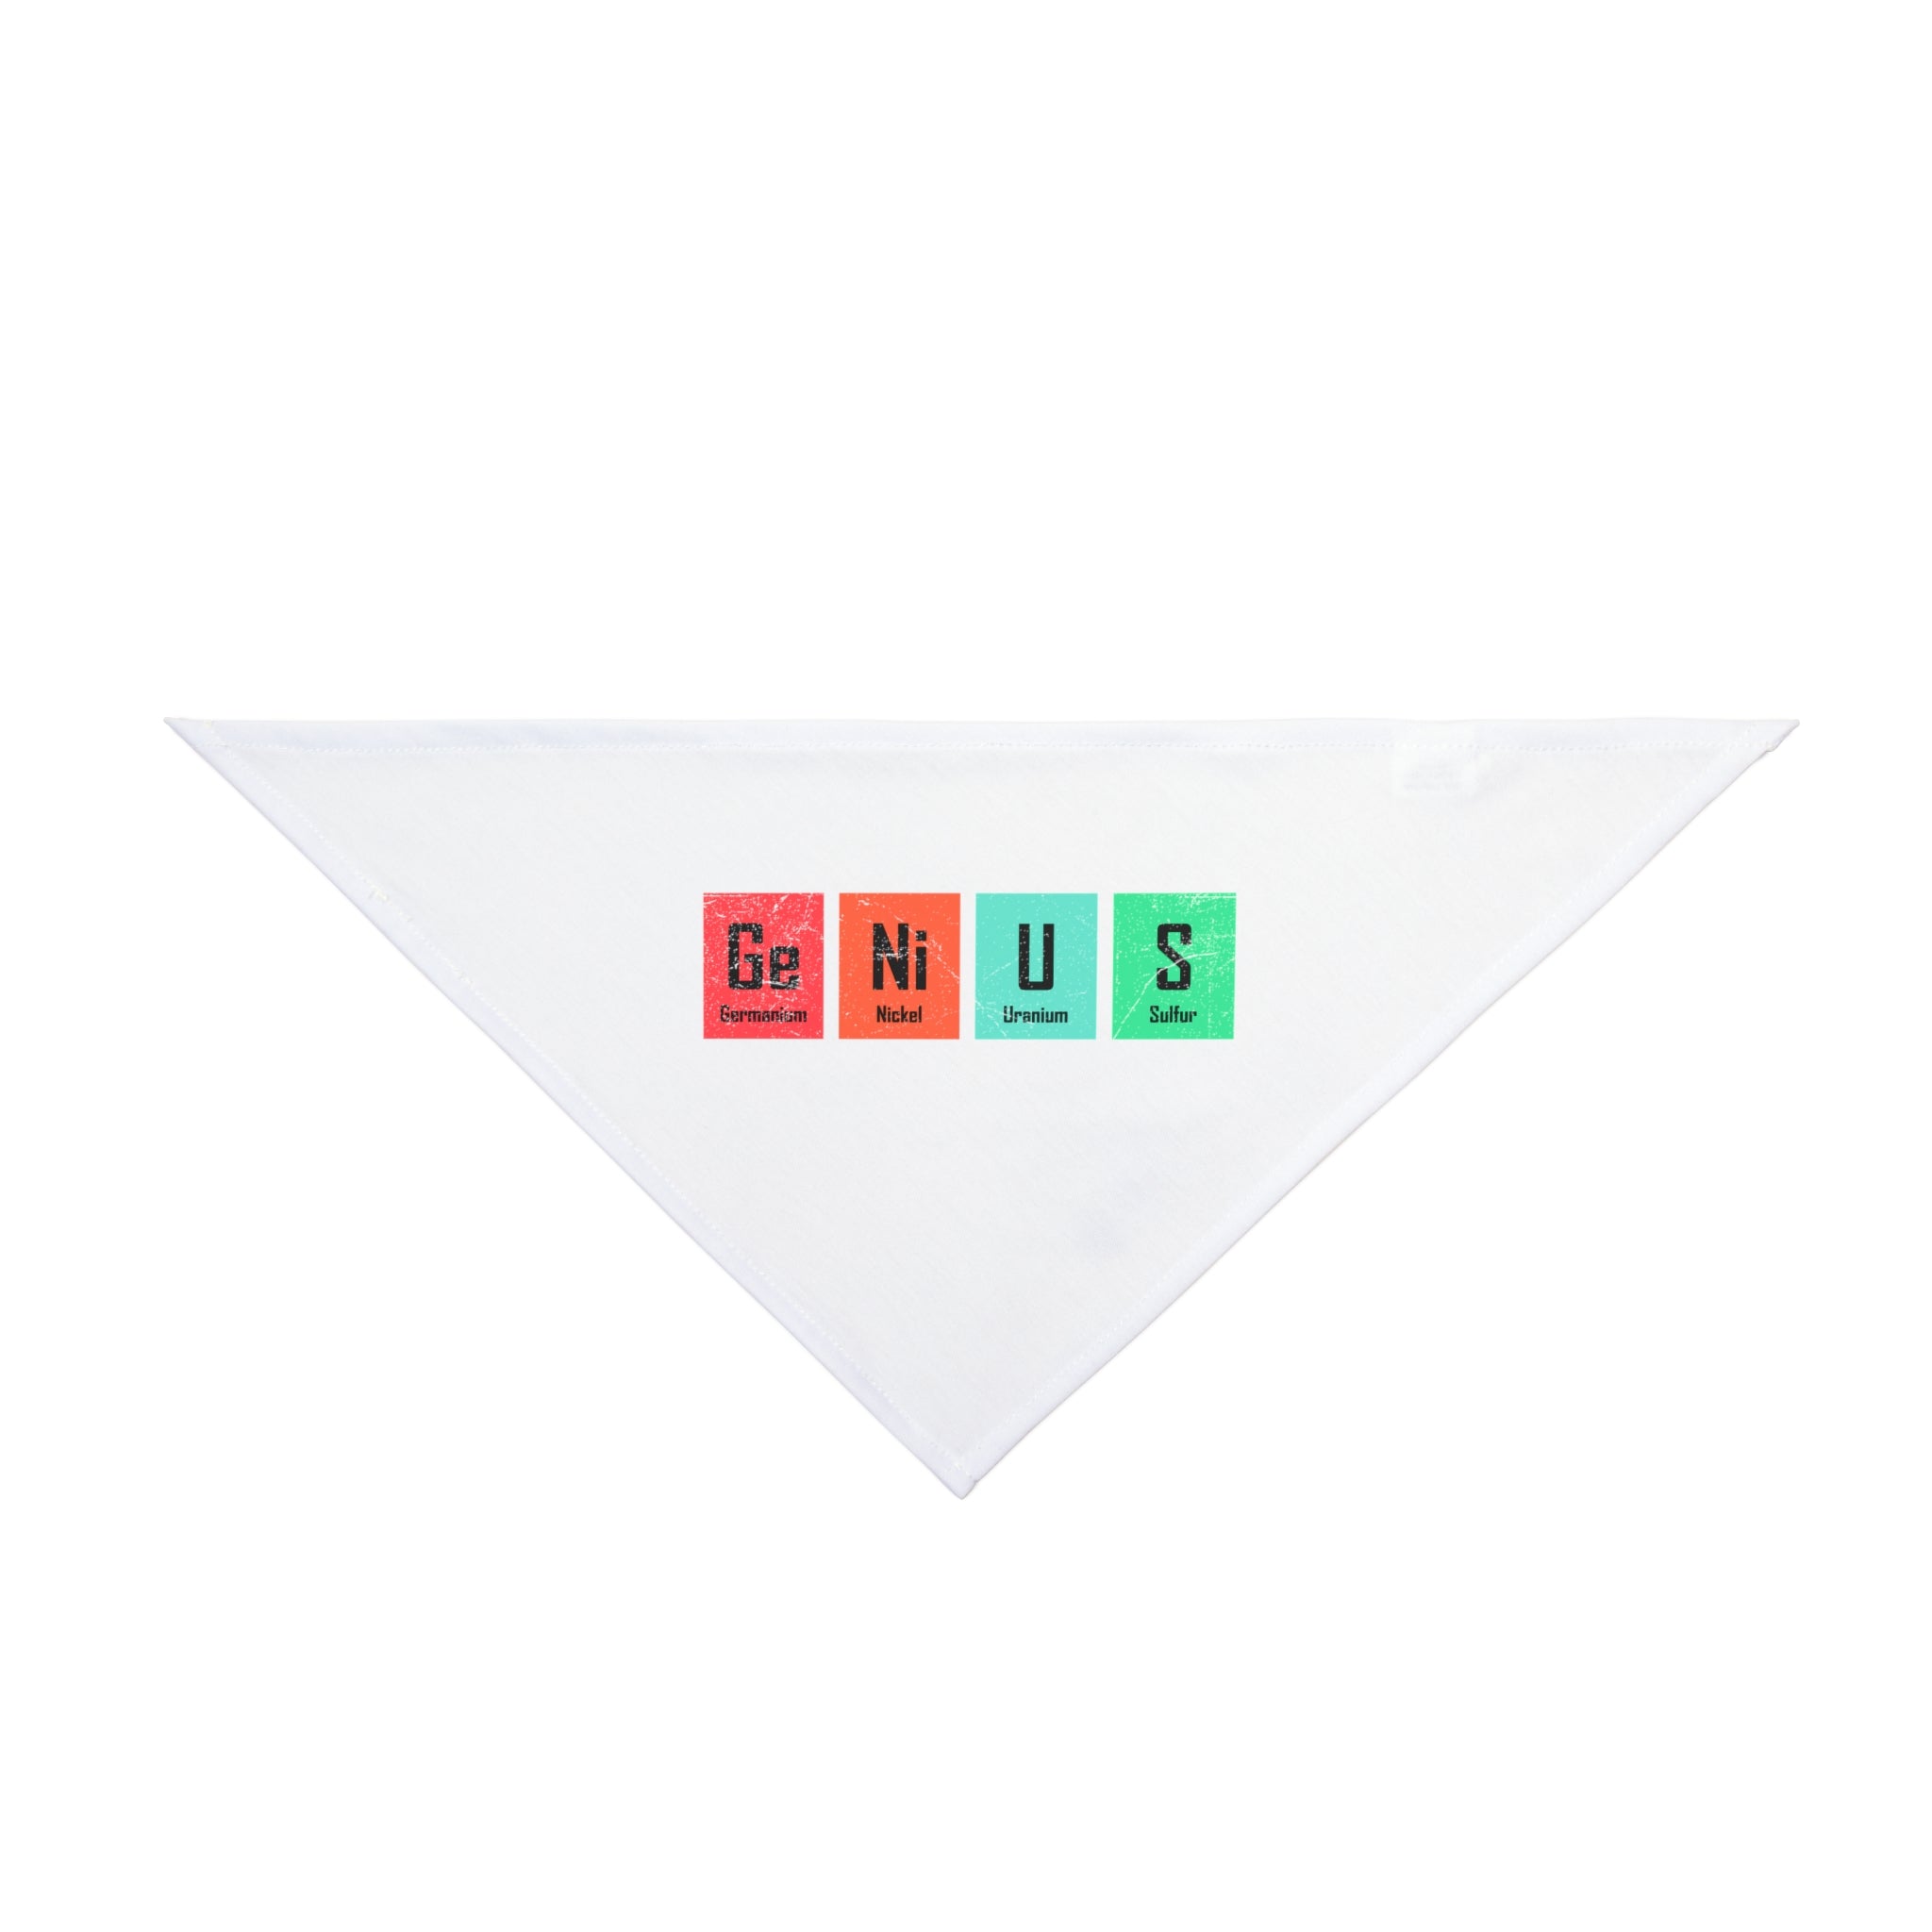 A Ge-Ni-U-S - Pet Bandana featuring the word "GENIUS" spelled with Germanium (Ge), Nickel (Ni), Uranium (U), and Sulfur (S) in element squares—perfect for design-loving pets.